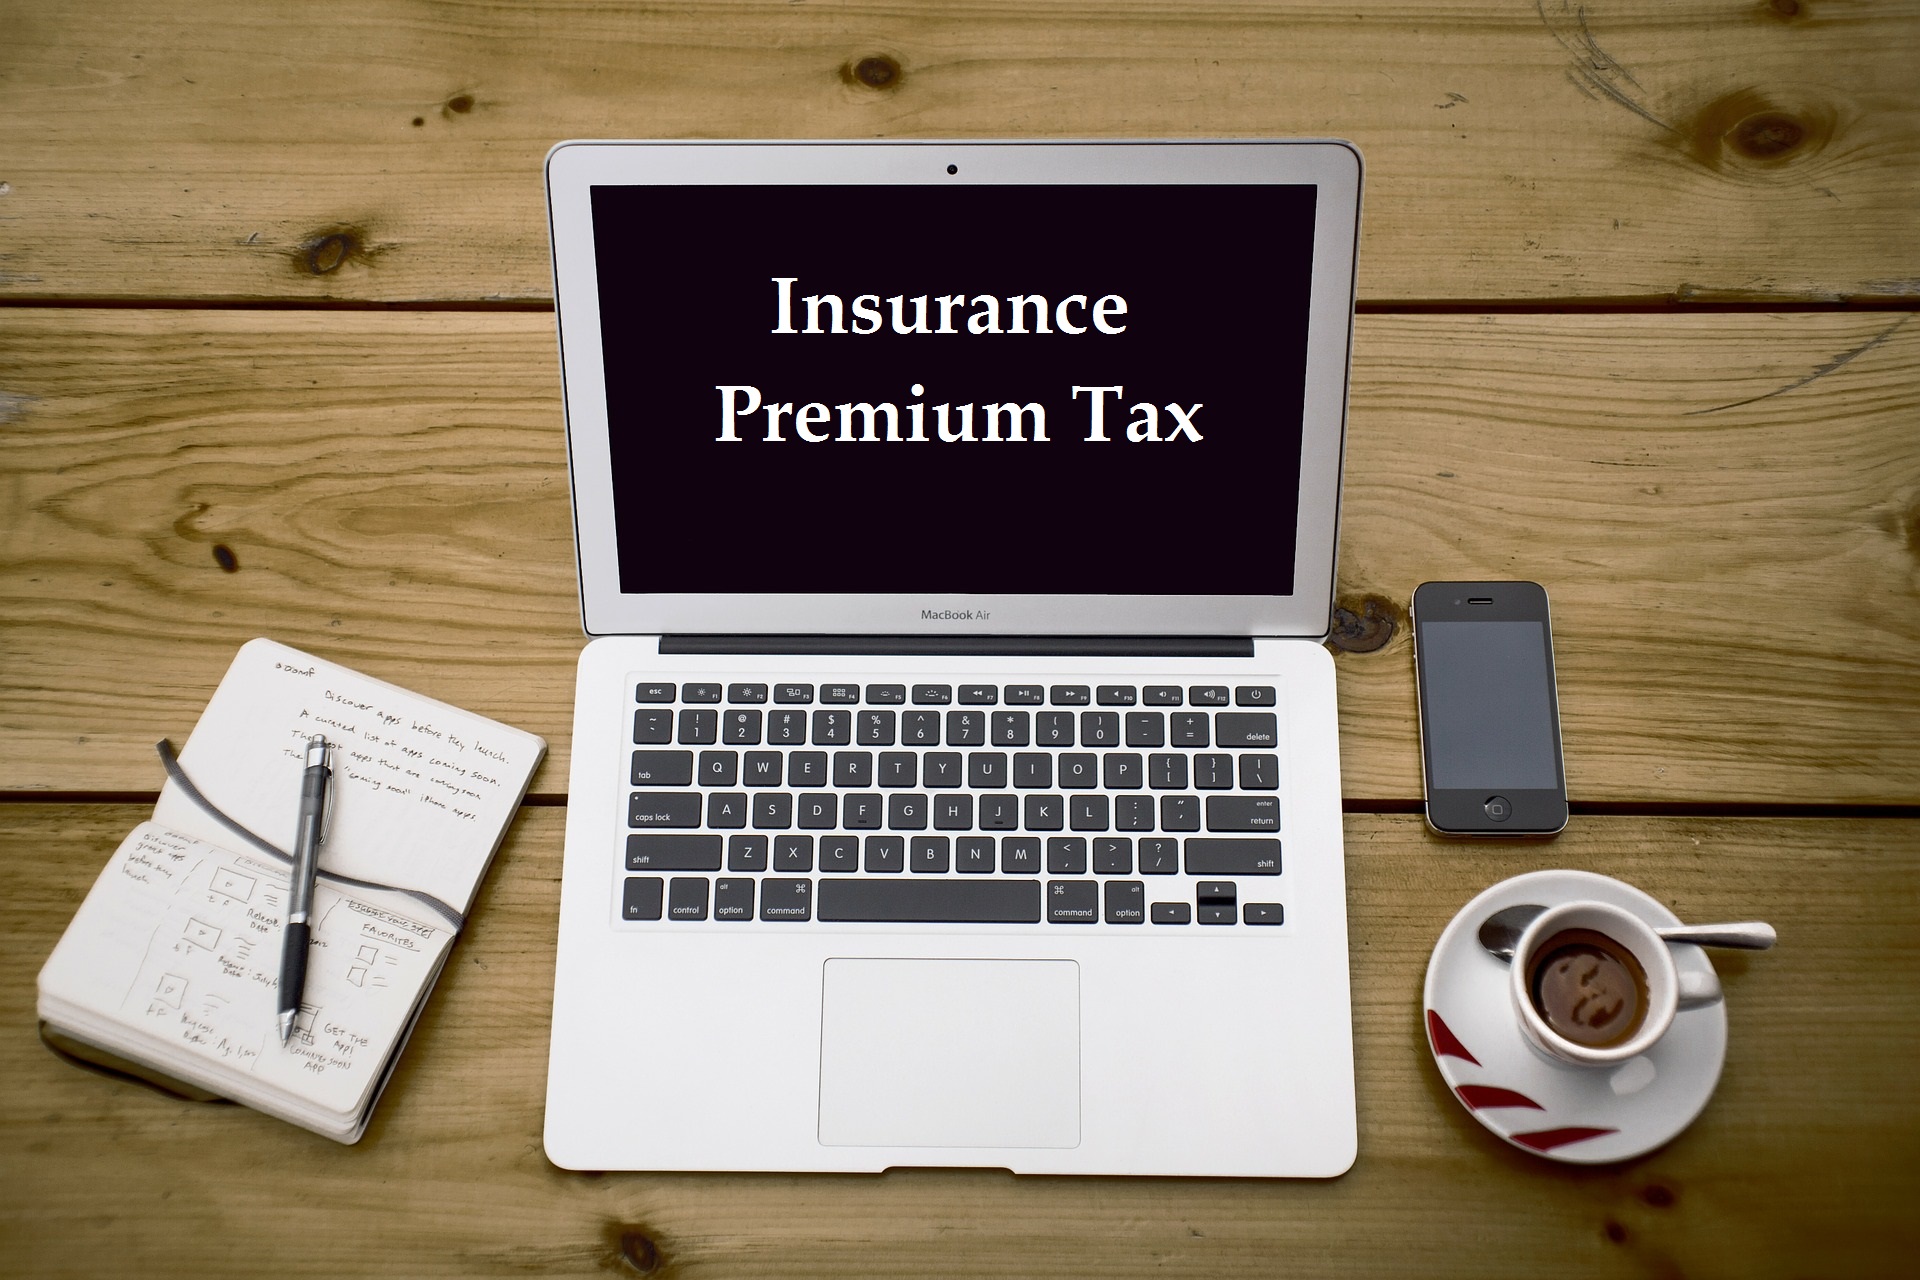 Insurance Premium Tax Benefit